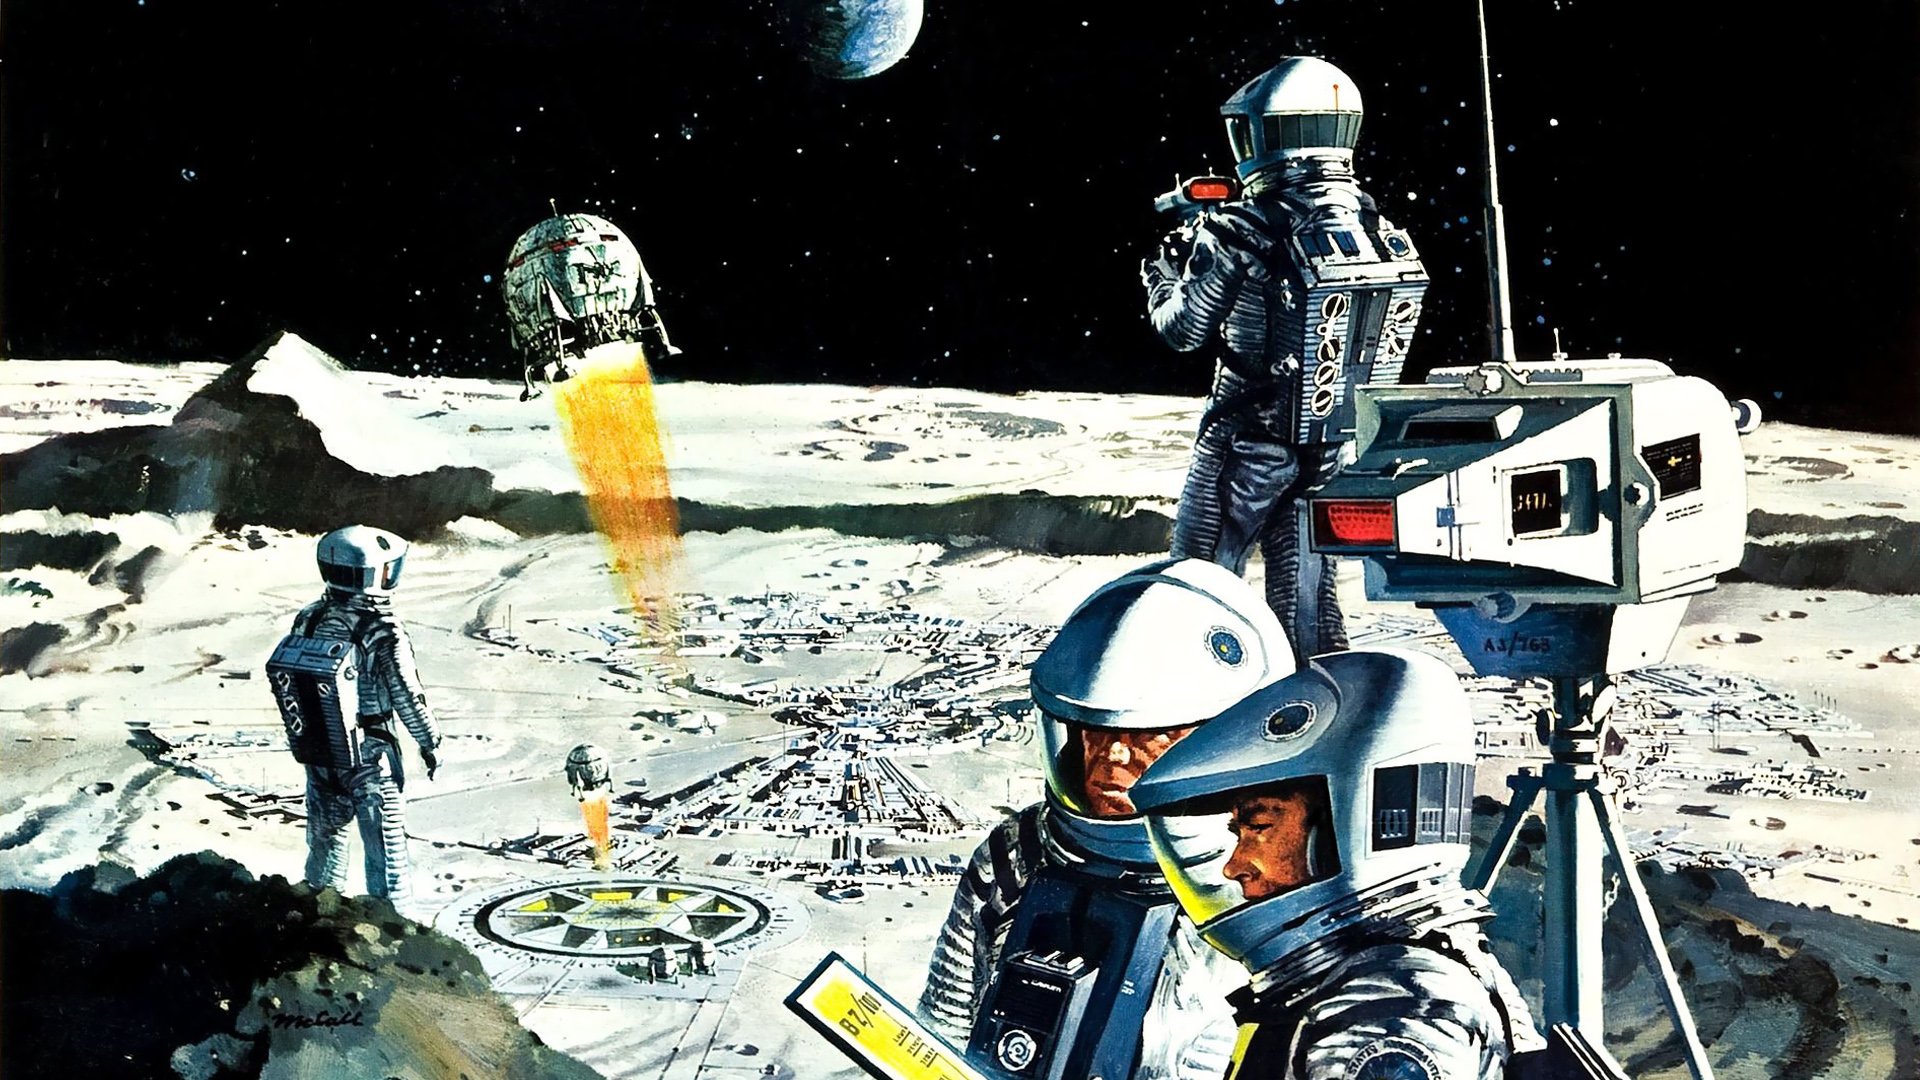 2001, Space, Odyssey, Sci fi, Mystery, Futuristic Wallpaper